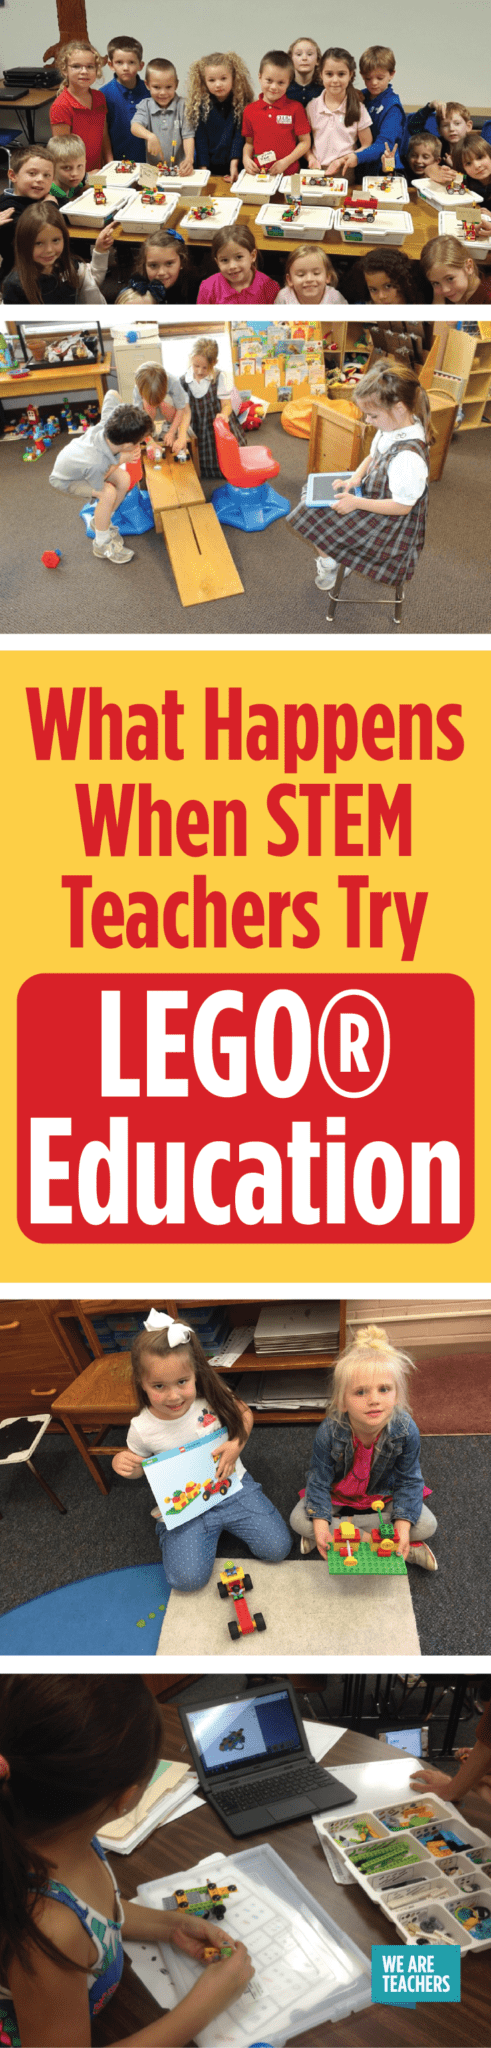 lego education kits